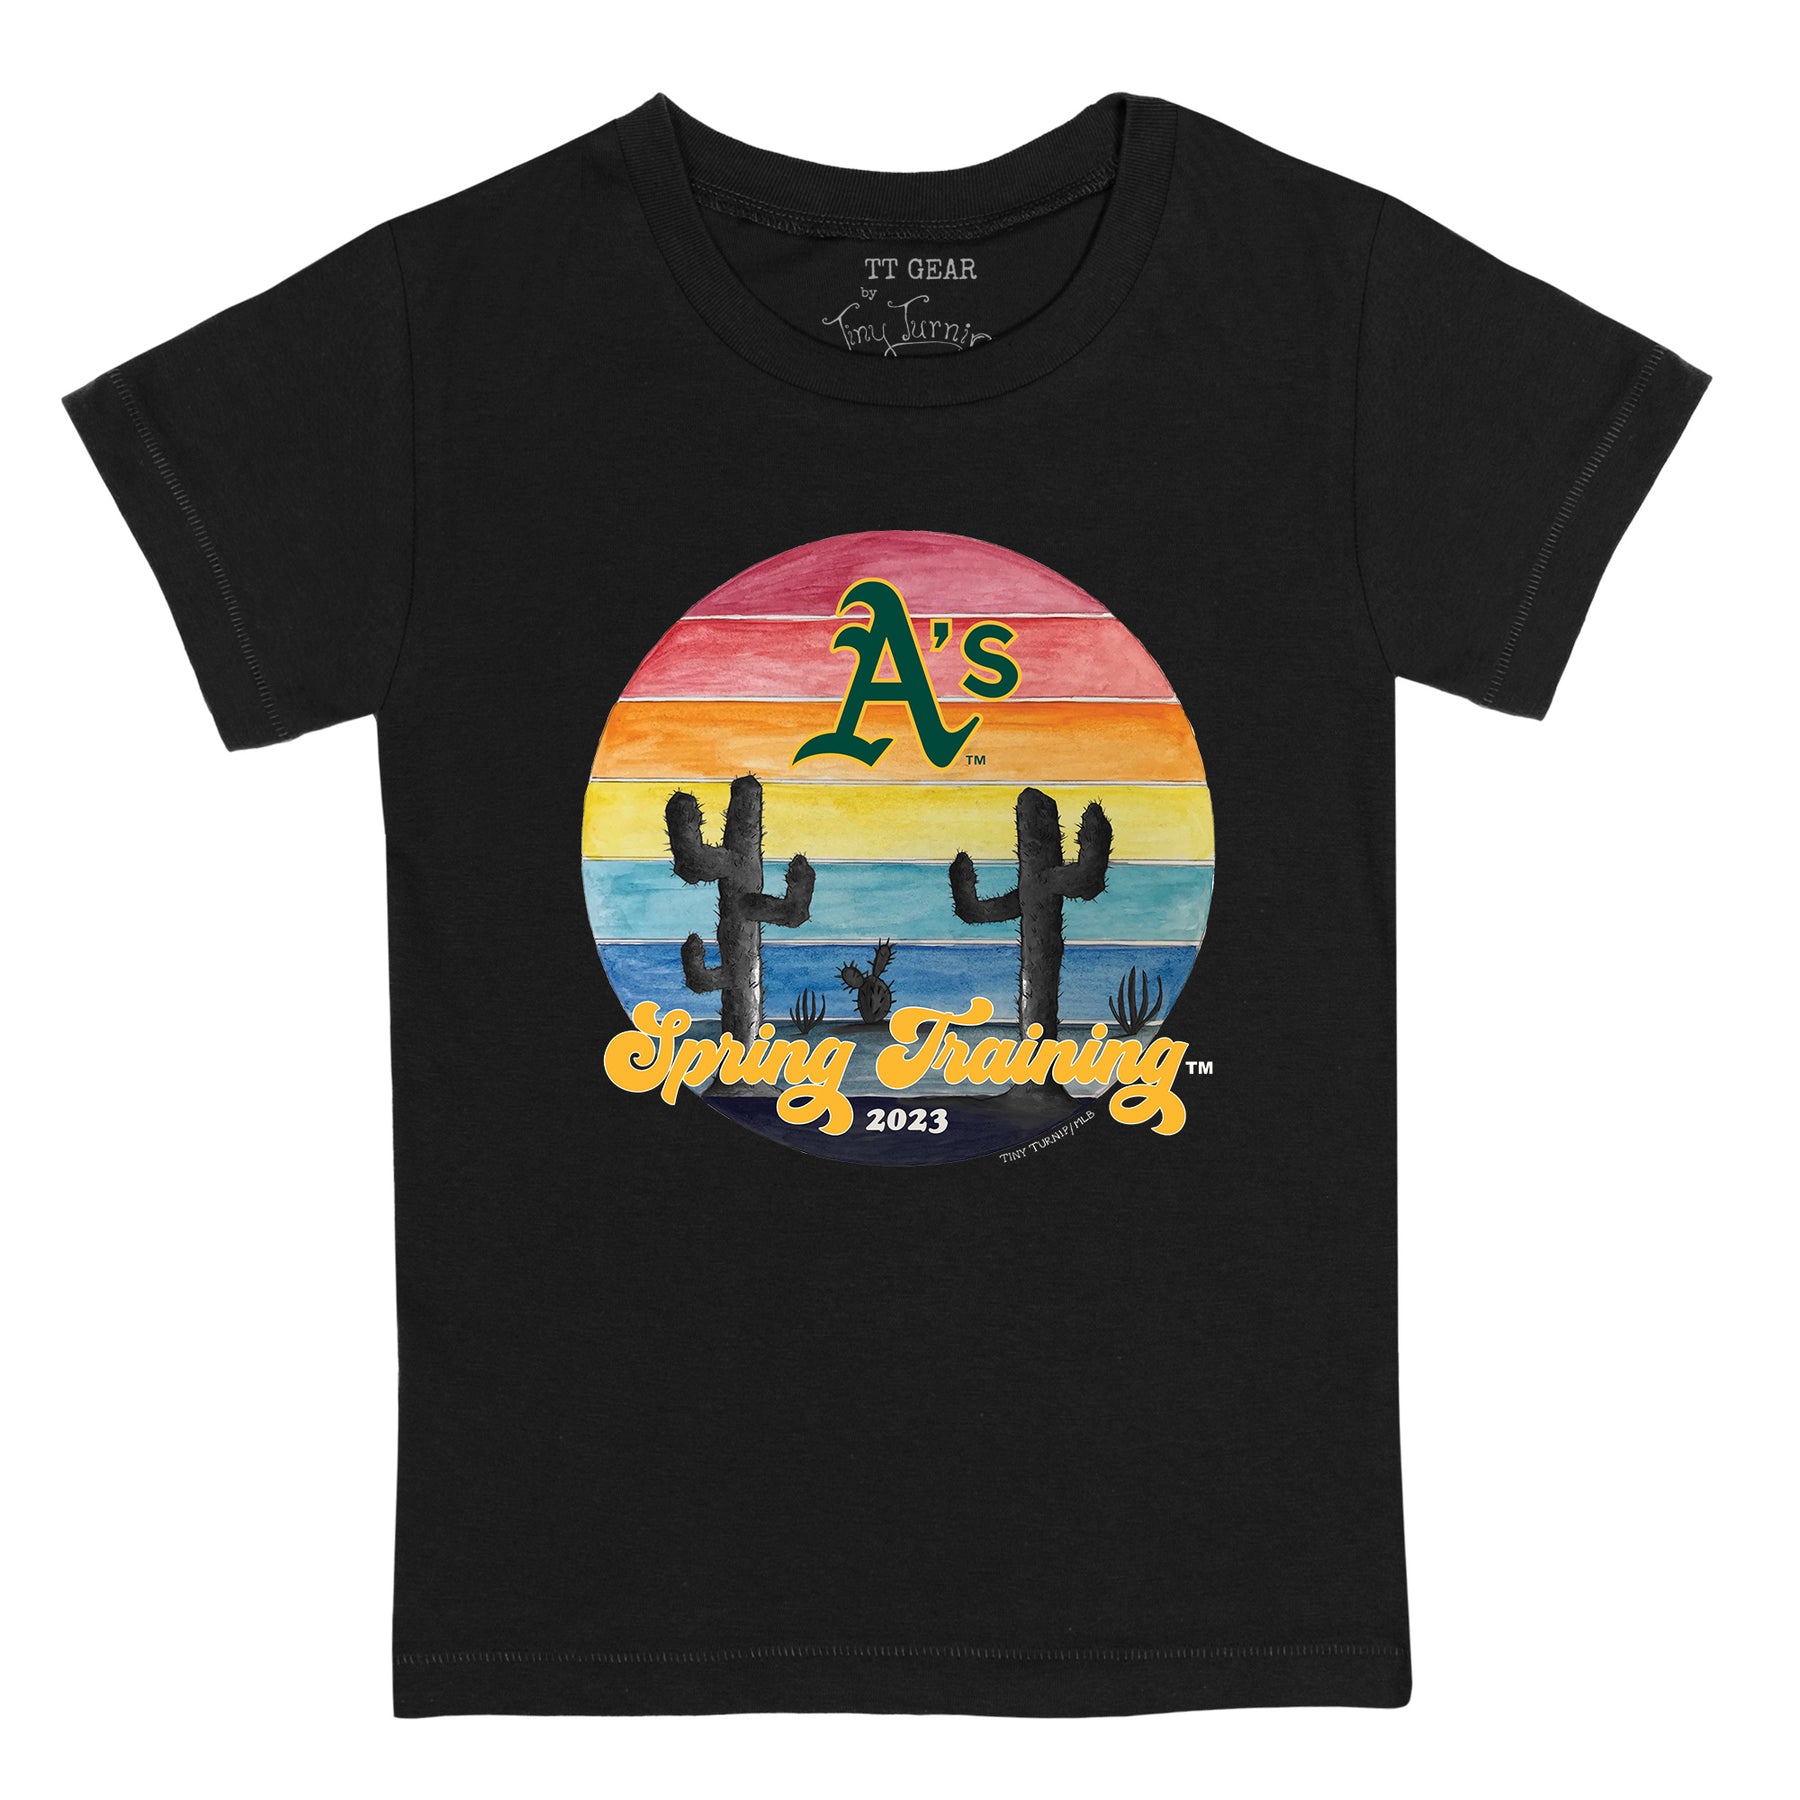 Oakland Athletics Spring Training 2023 Tee Shirt